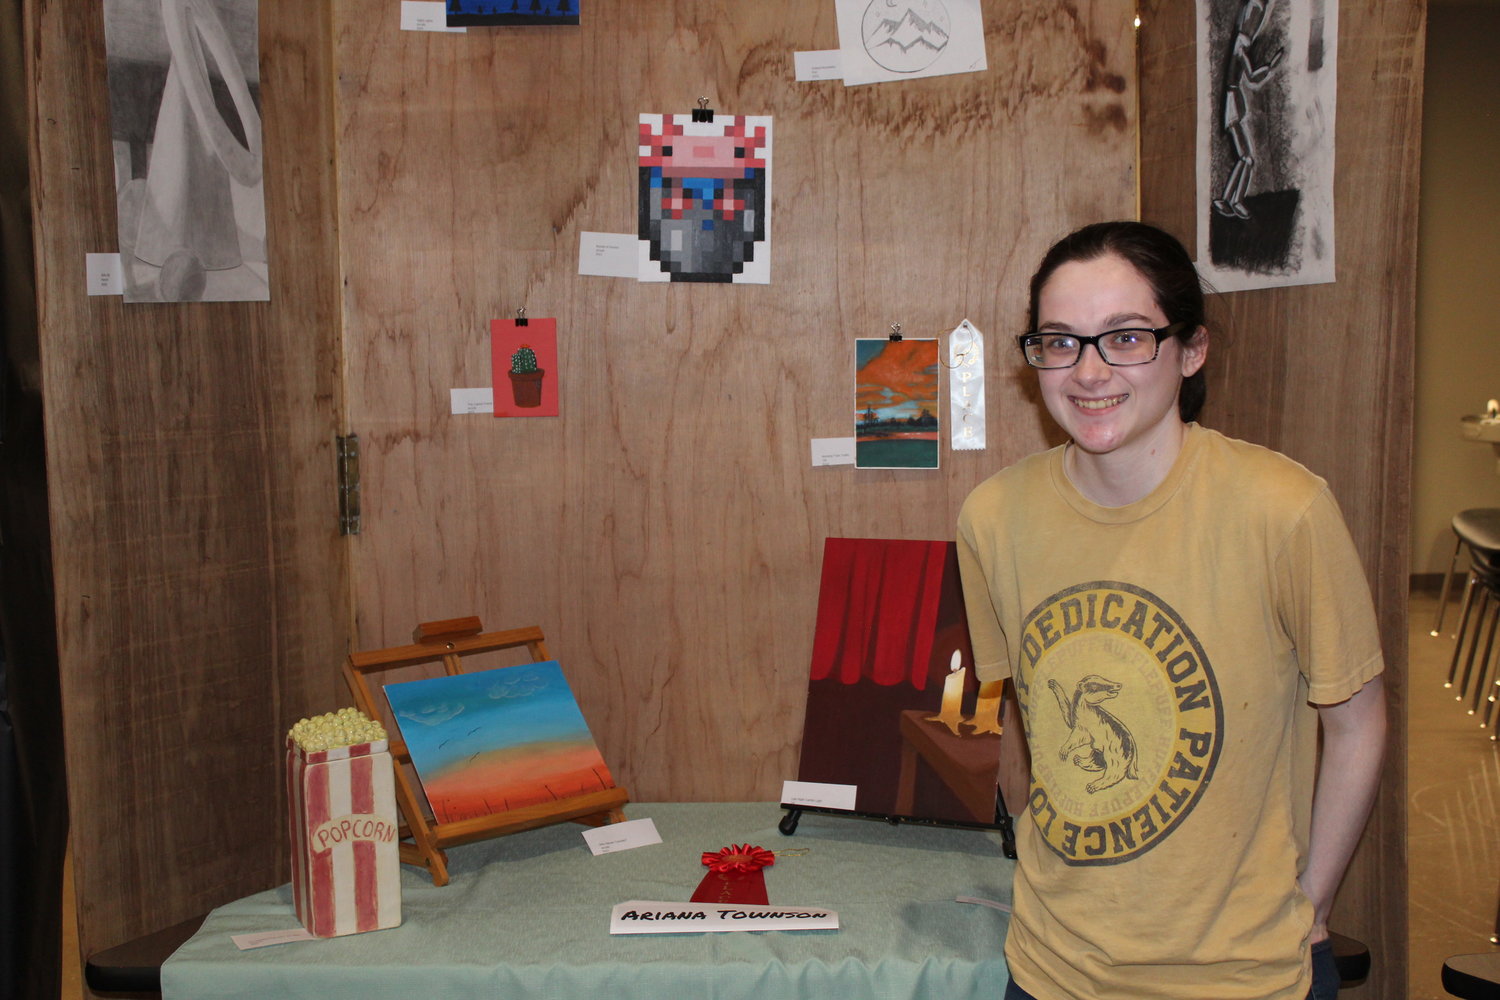 Ariana Townson won 2nd place in senior art displays.